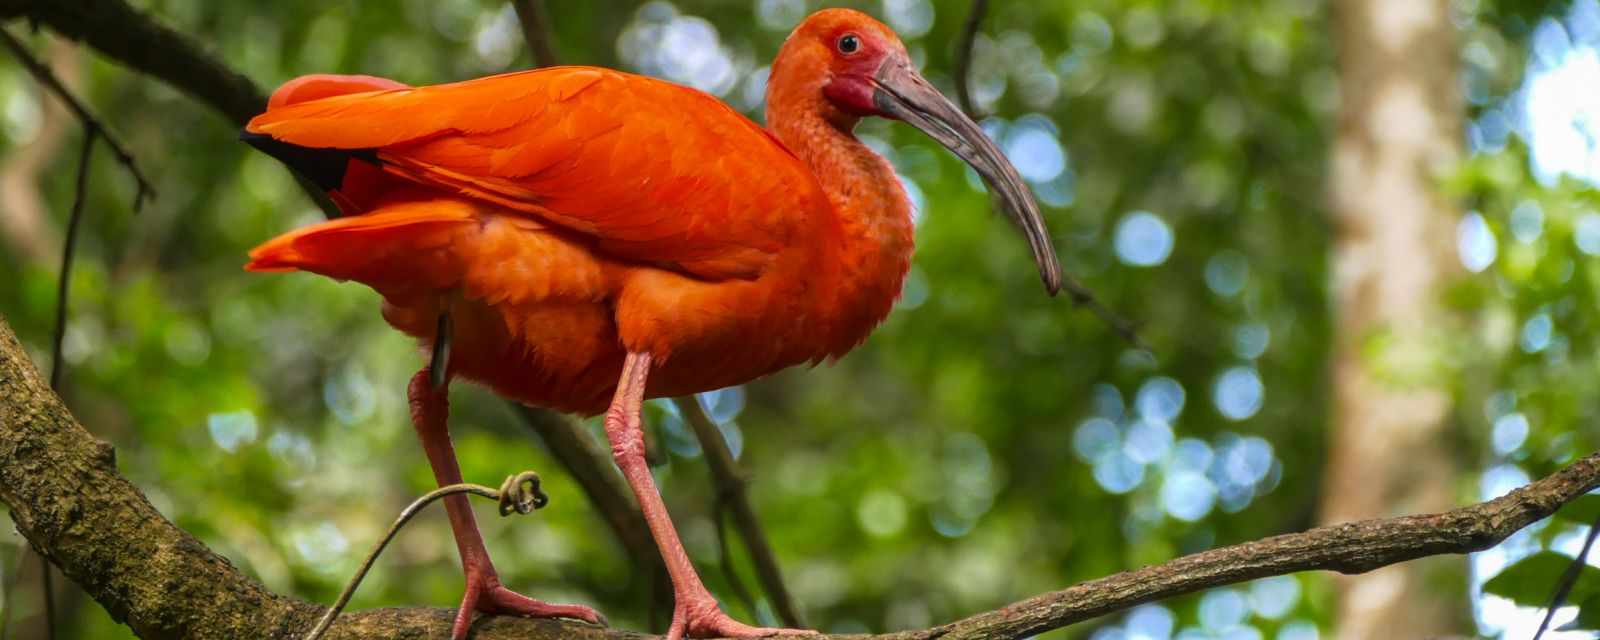 Scarlet Ibis in the Caroni Swamp - The Bird Sanctuary in Trinidad